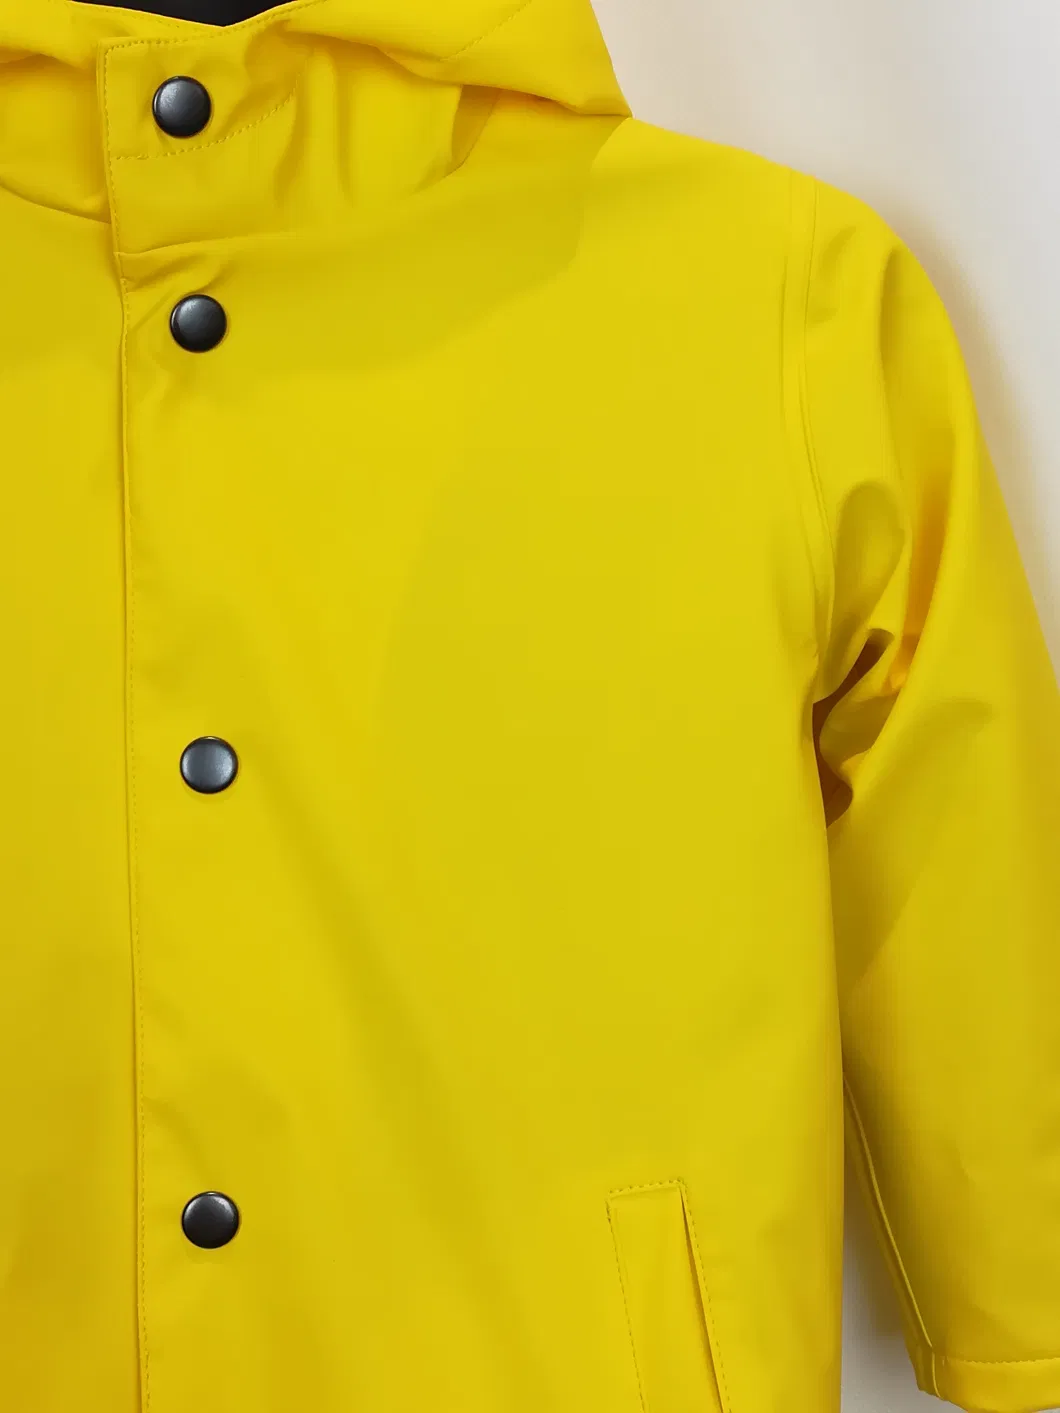 Children′s Simple Style PU Materials Rain Jacket Waterproof MID-Length Rainwear